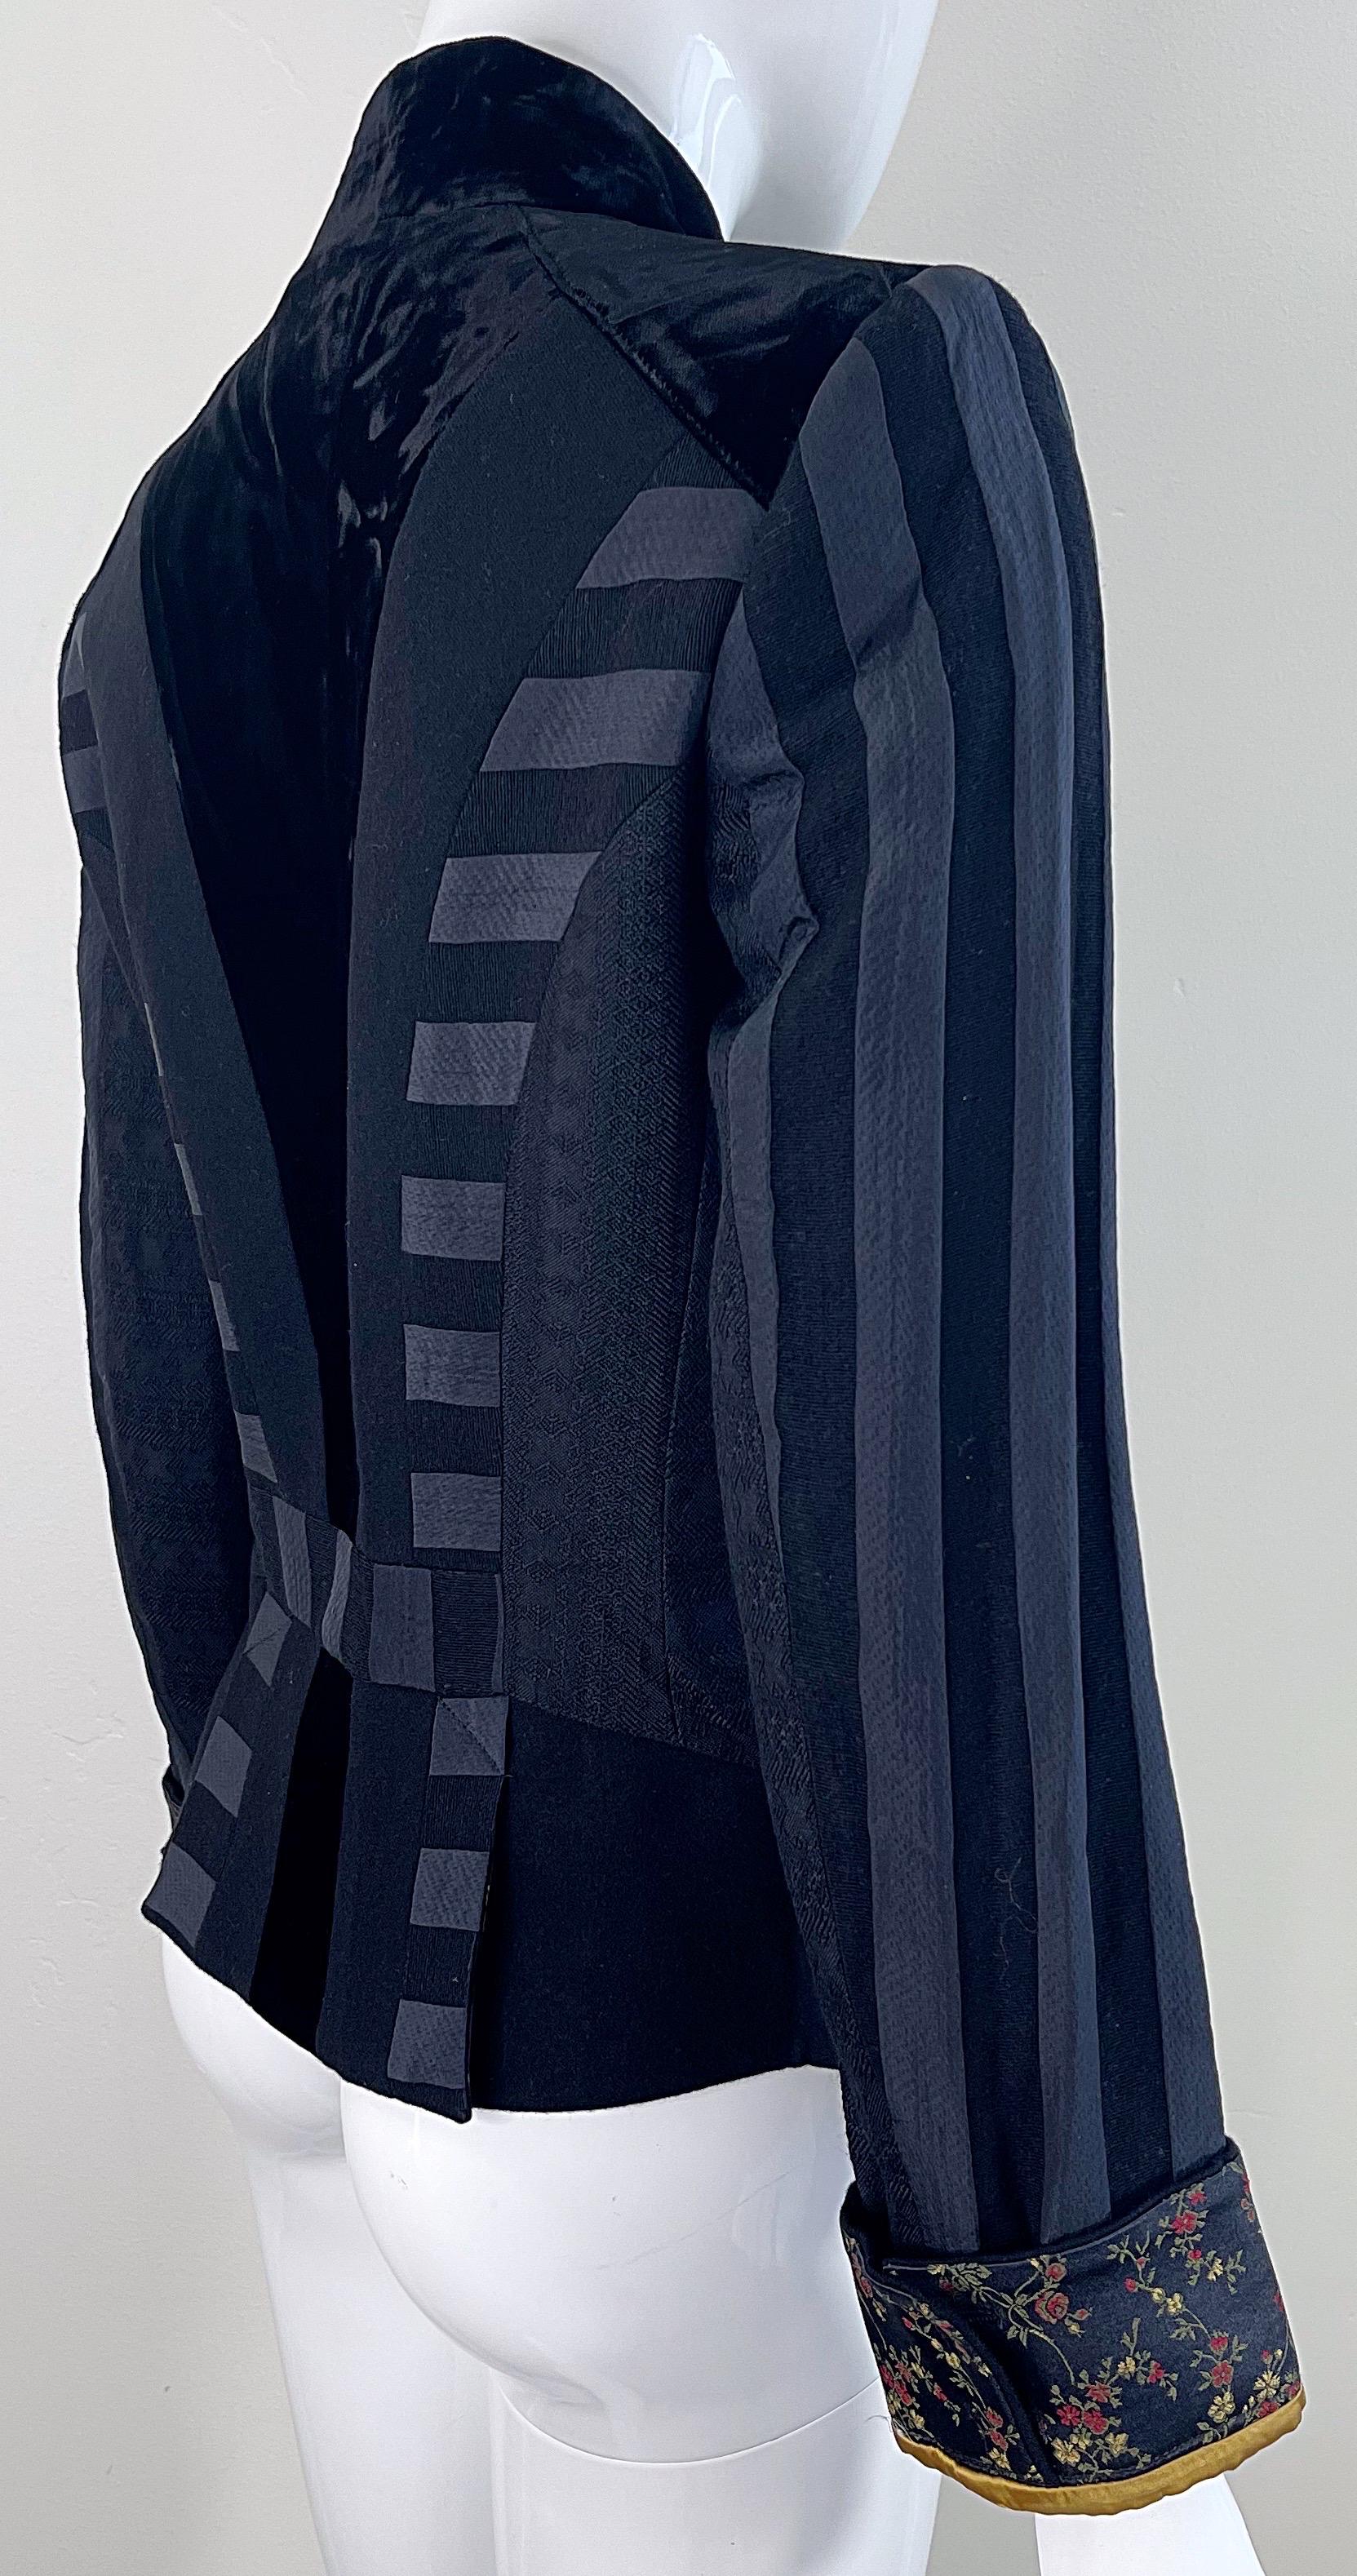 Etro Black Silk Blend Size 44 / US 8 Military Inspired Jacket w/ Flower Cuffs For Sale 4